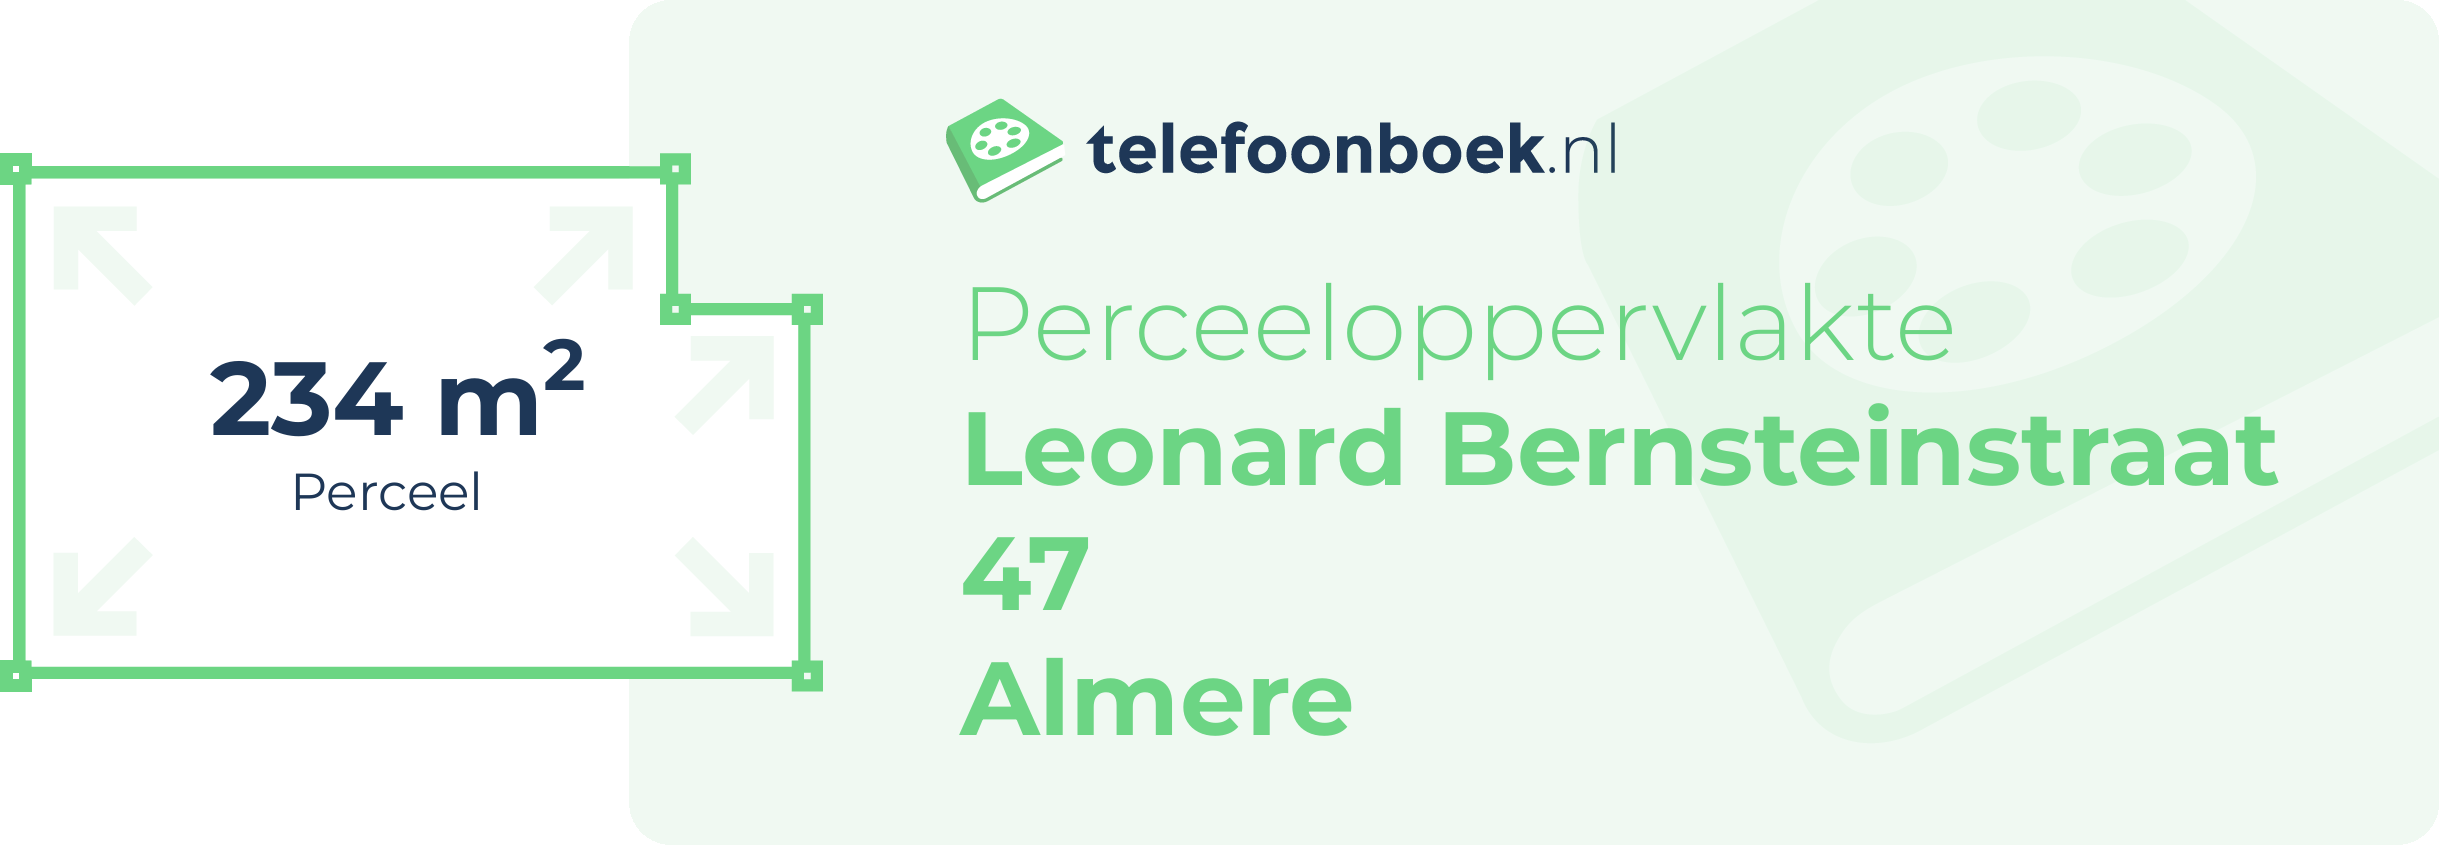 Perceeloppervlakte Leonard Bernsteinstraat 47 Almere